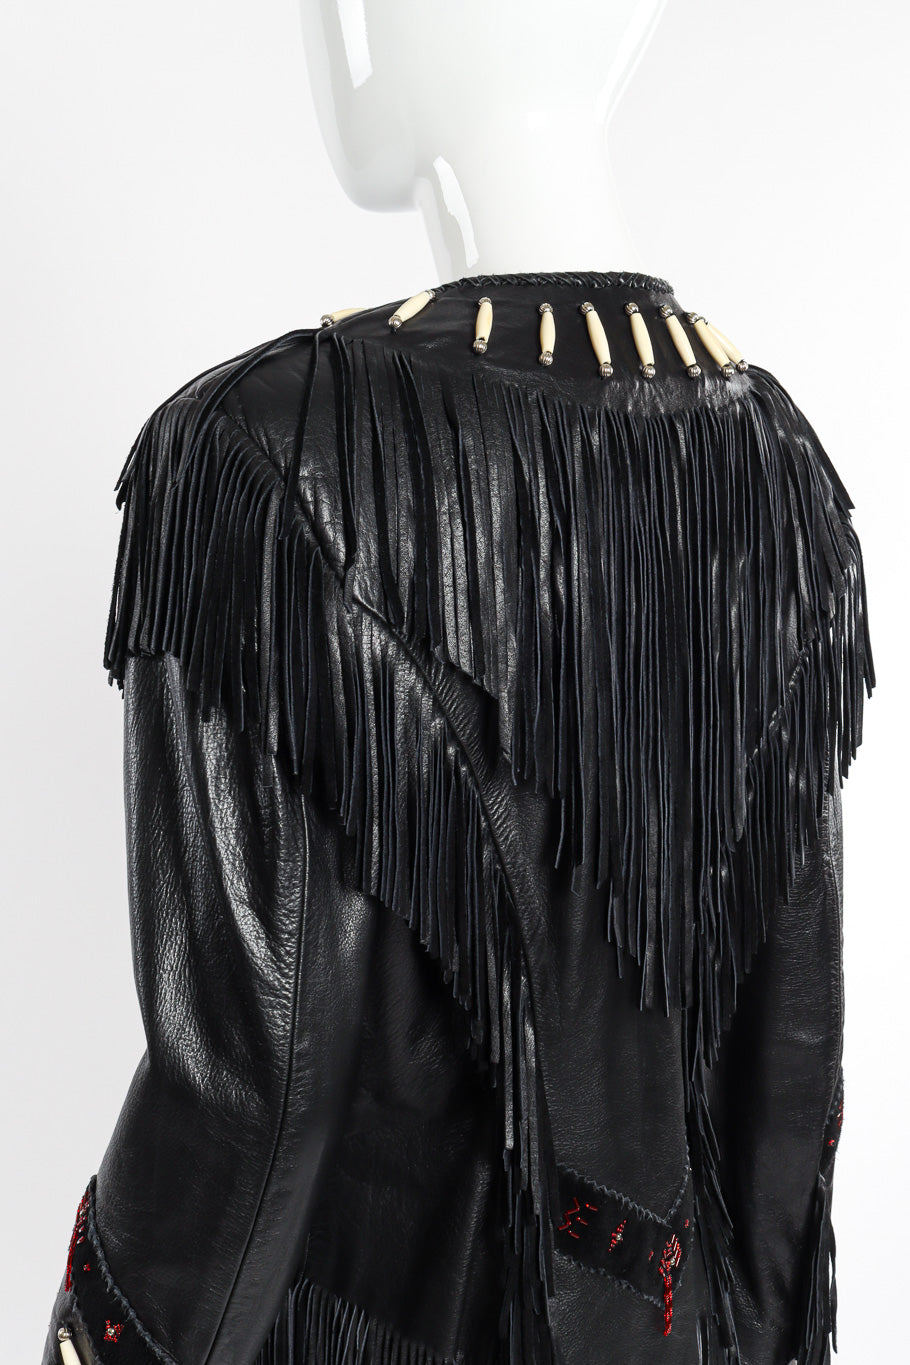 Vintage Arturo Beaded Leather Fringe Jacket 3/4 back view on mannequin closeup @recessla